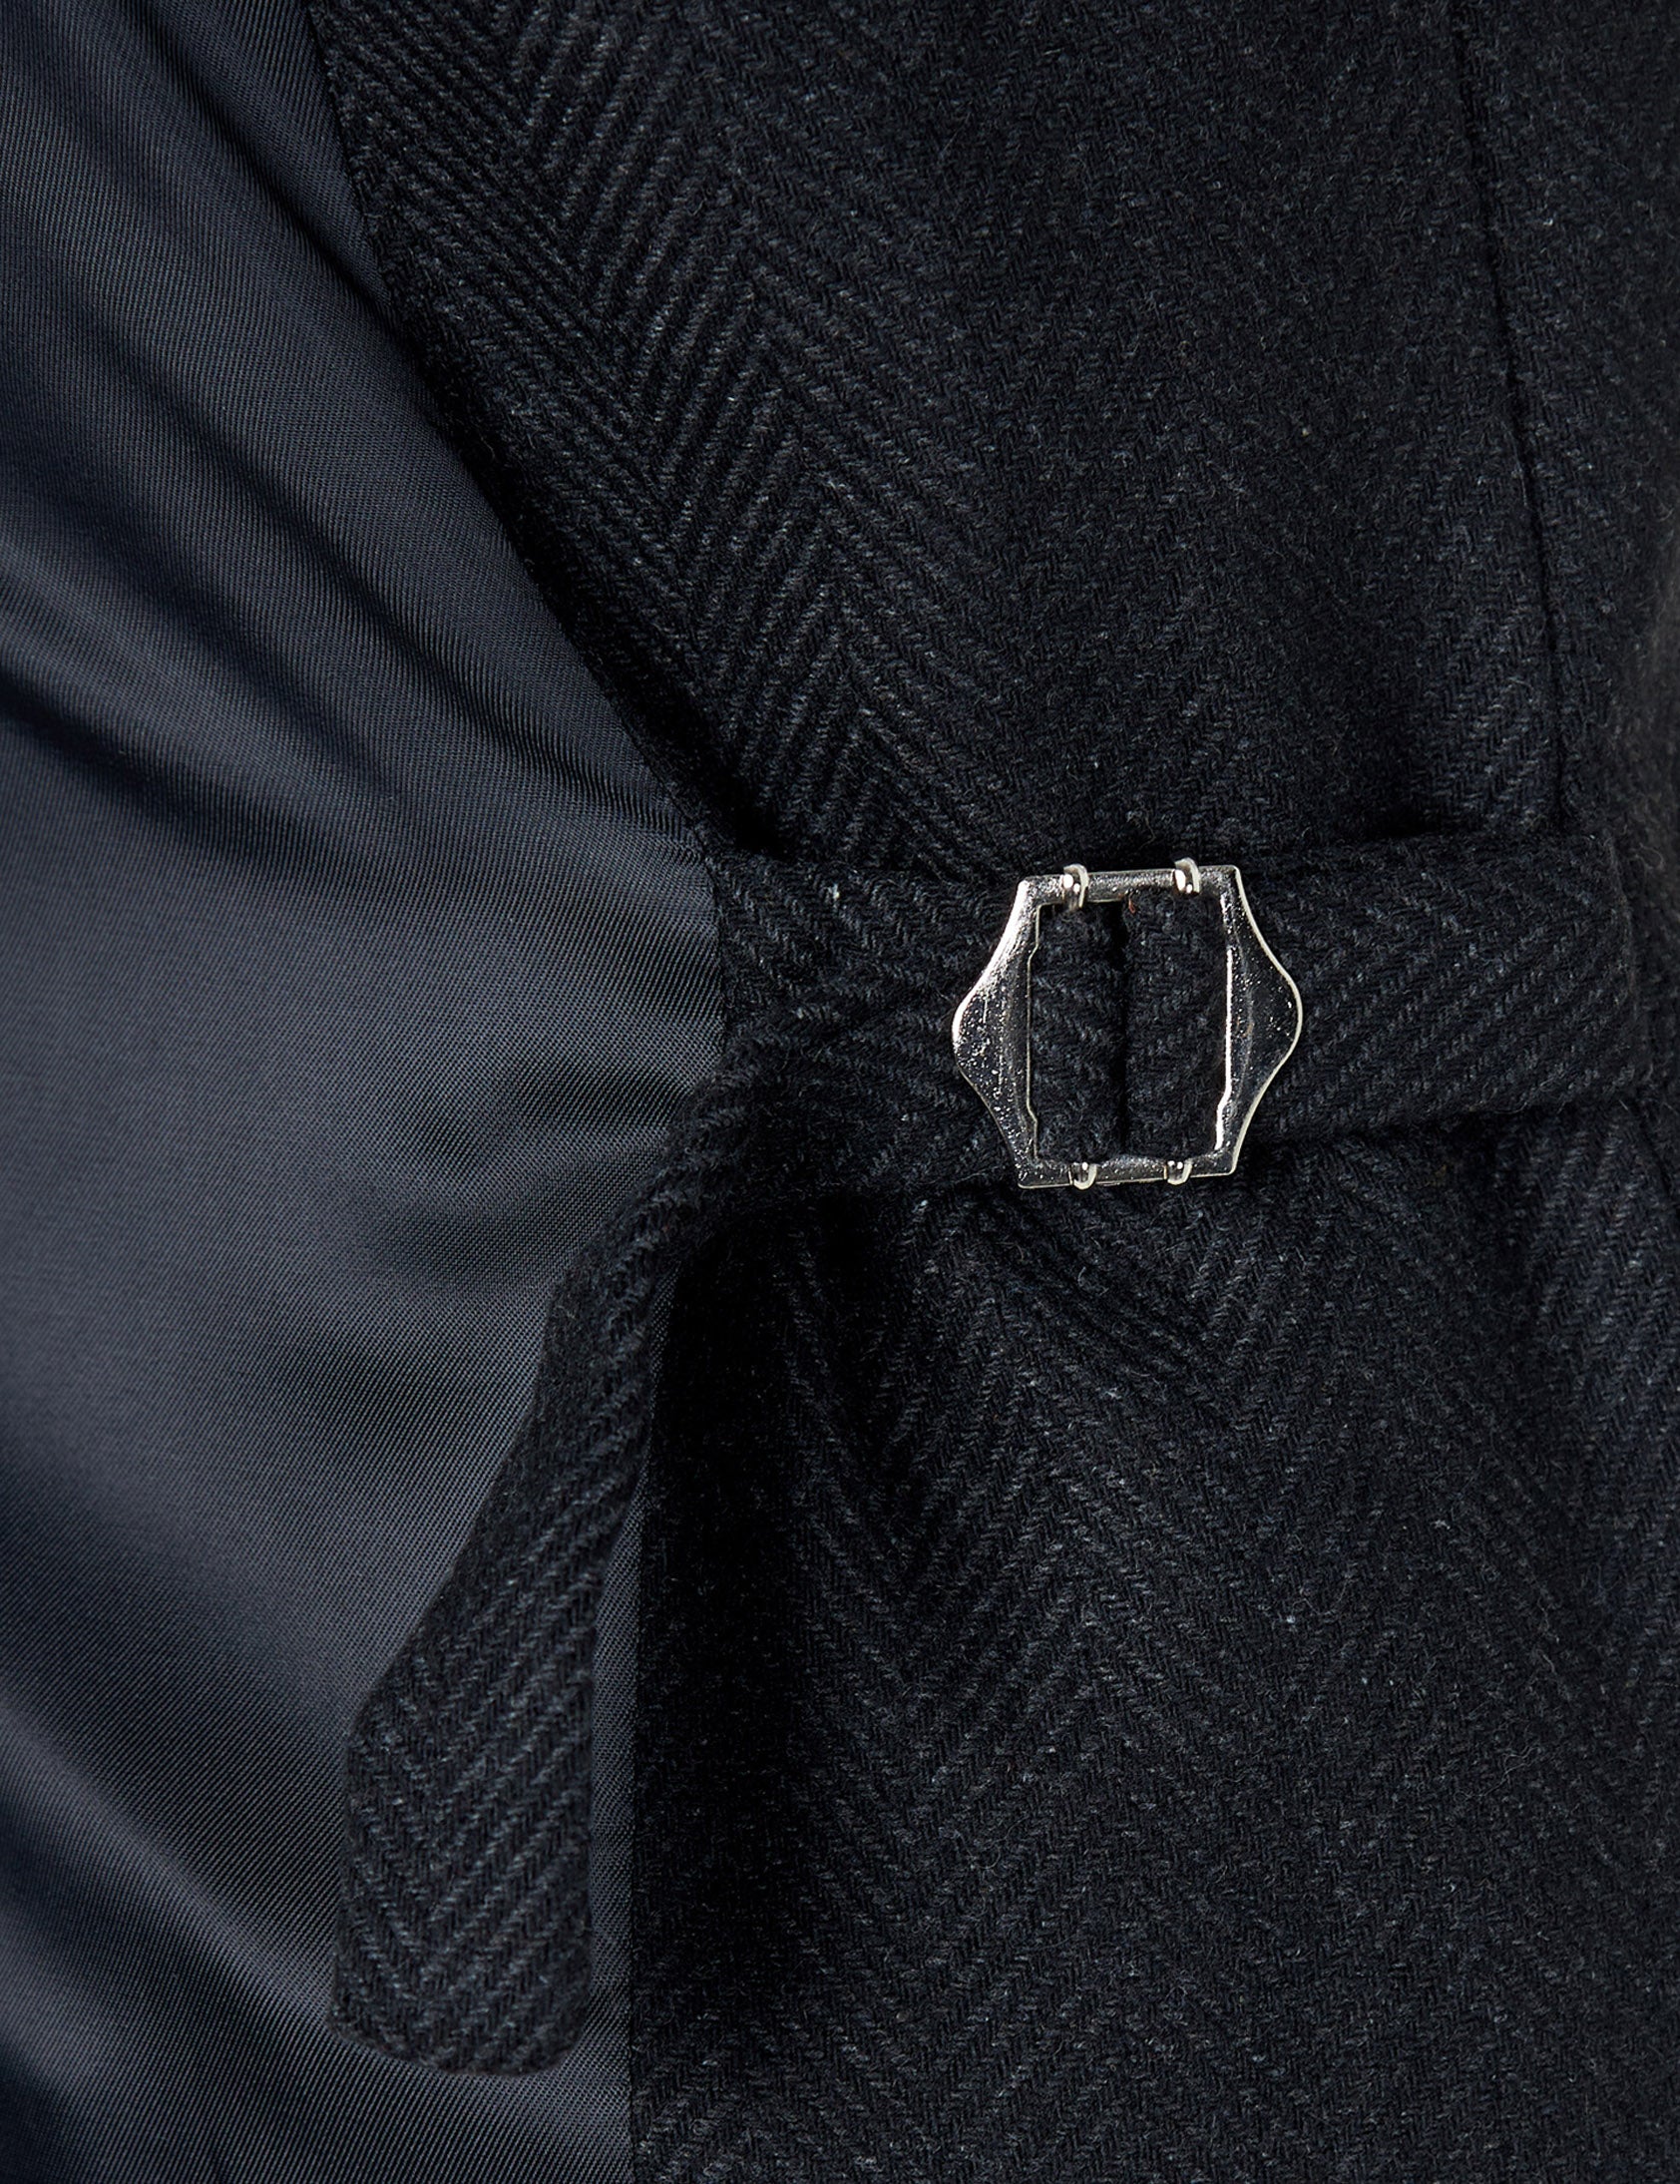 Tyler - Tweed Double Breasted Dark Grey waistcoat